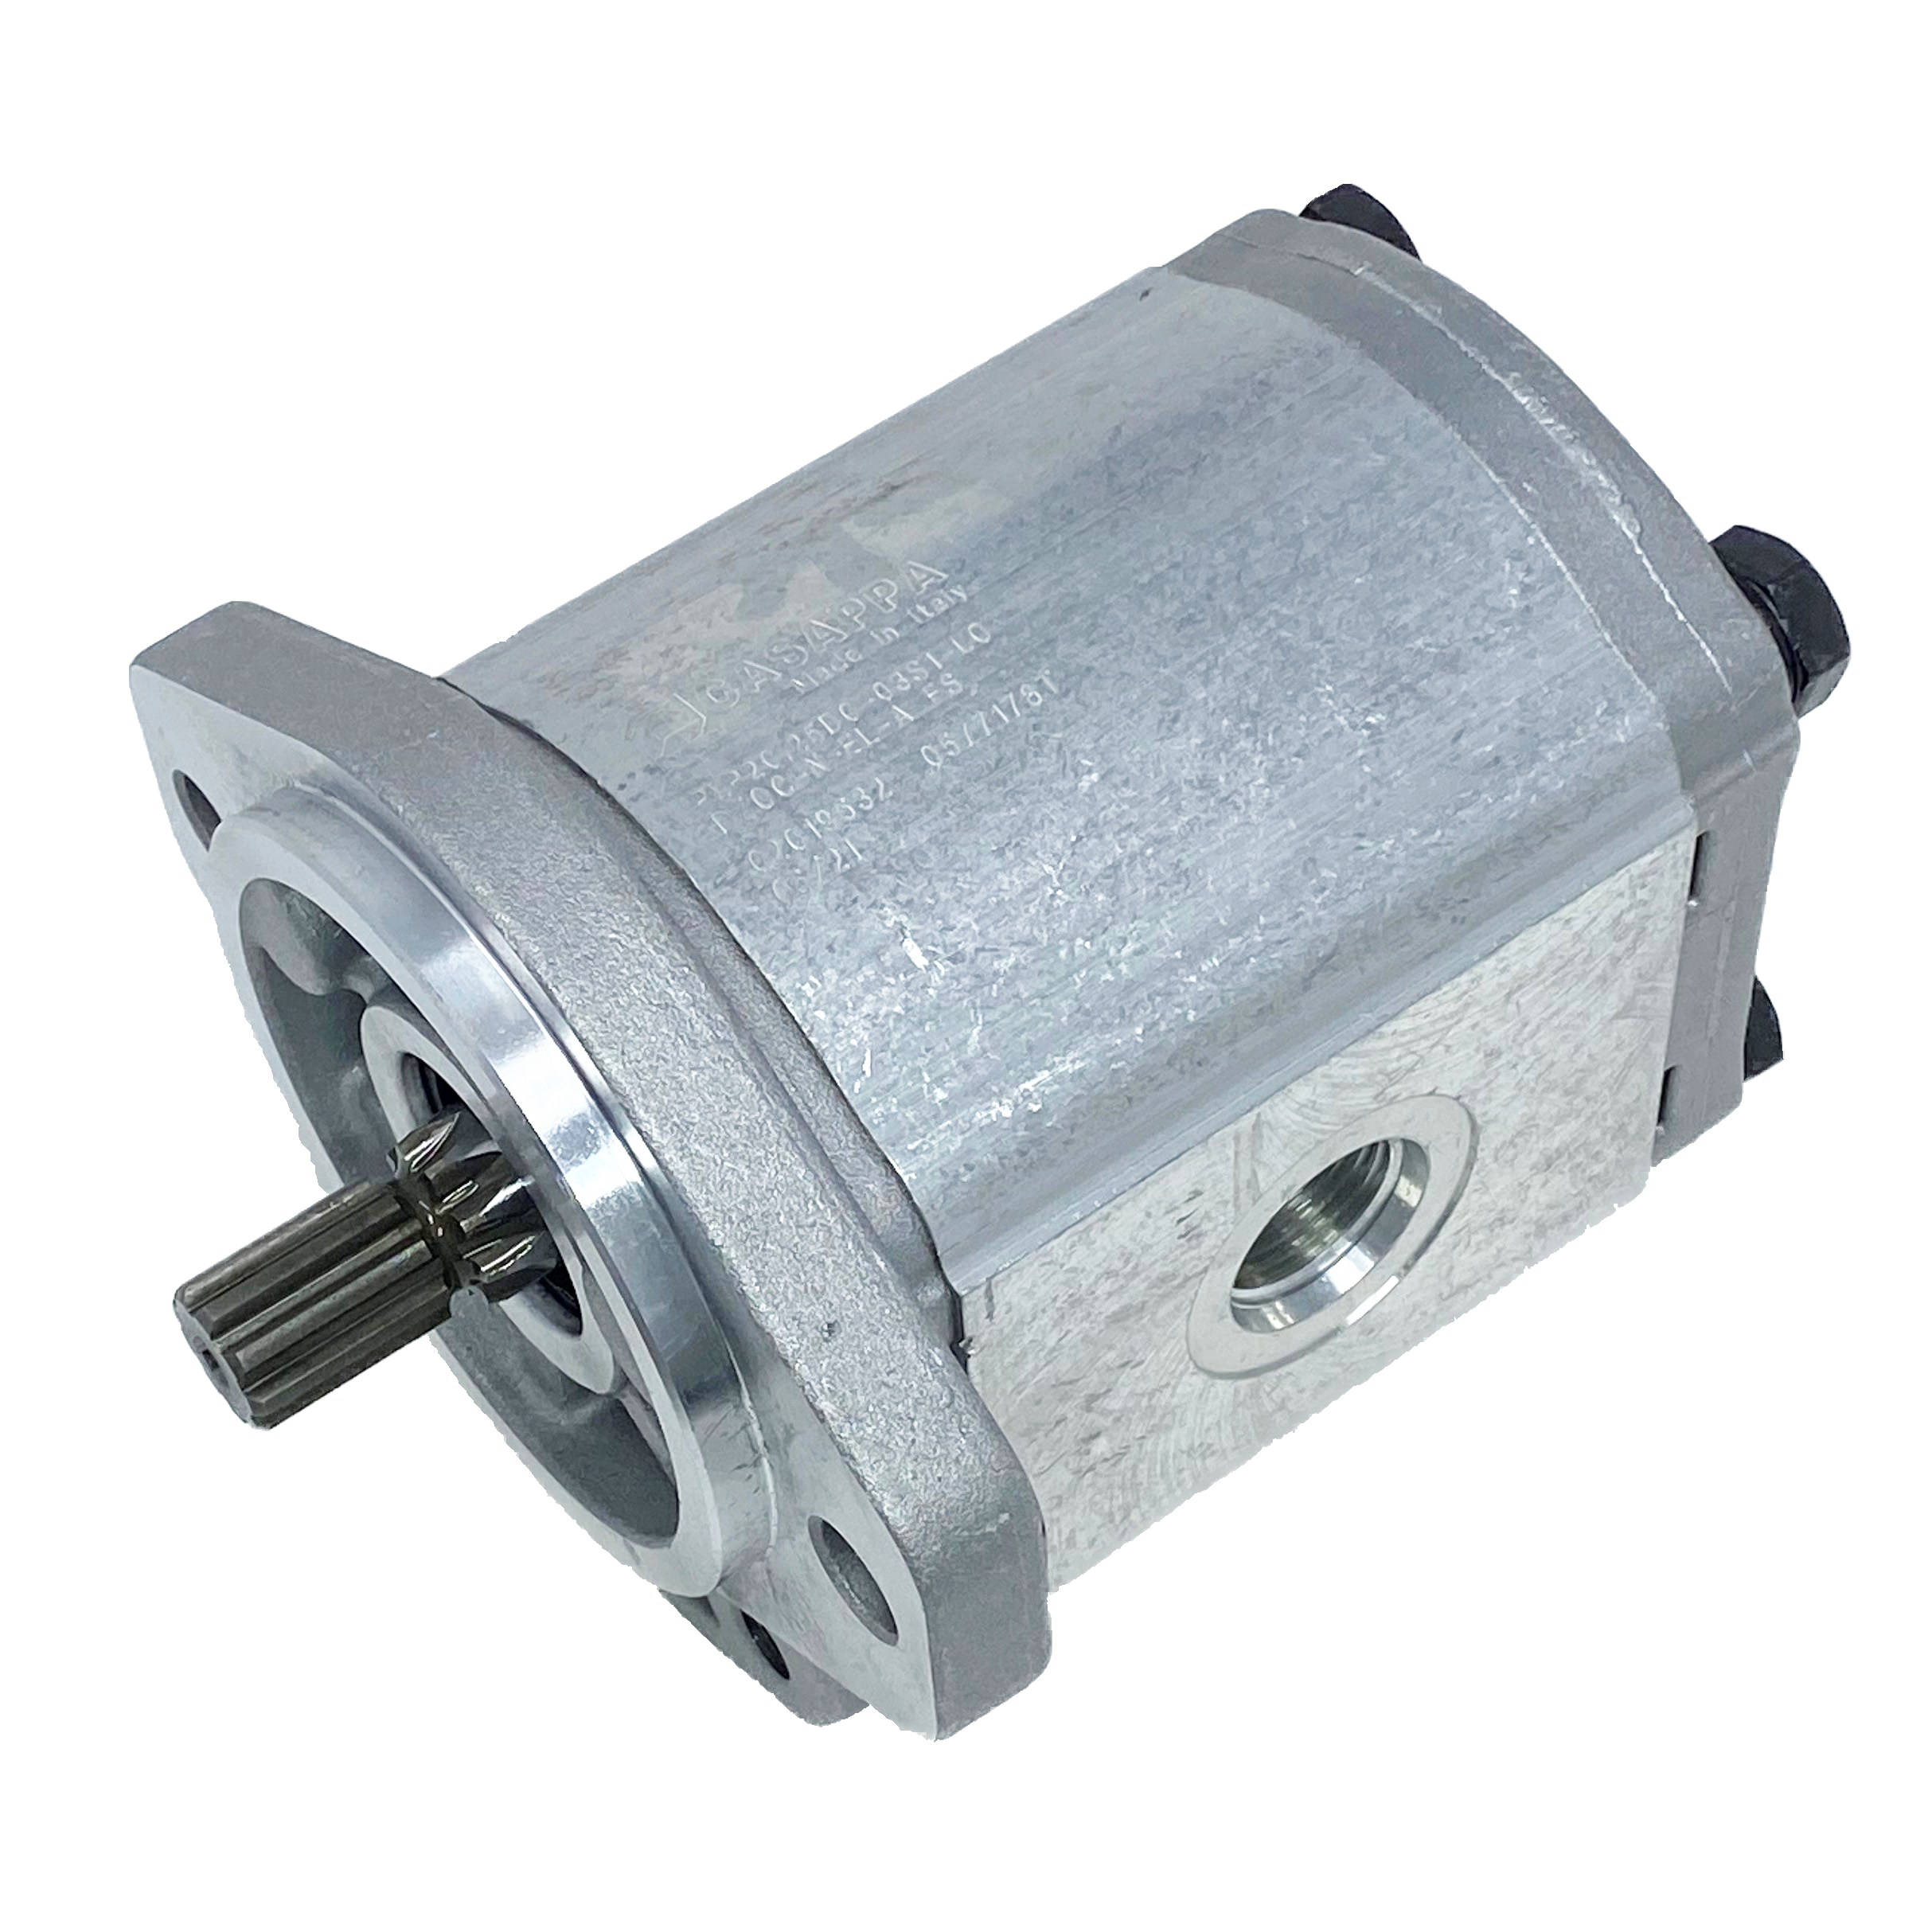 PHM20.27,8R0-07S9-LOC/OG-N-EL : Casappa Polaris Gear Motor, 28.21cc, 2900psi Rated, 2500RPM, Reversible Rear External Drain, 11T 16/32dp Shaft, SAE A 2-Bolt Flange, 0.625 (5/8") #10 SAE Inlet, 1.25" #20 SAE Outlet, Cast Iron Body, Aluminum Flange